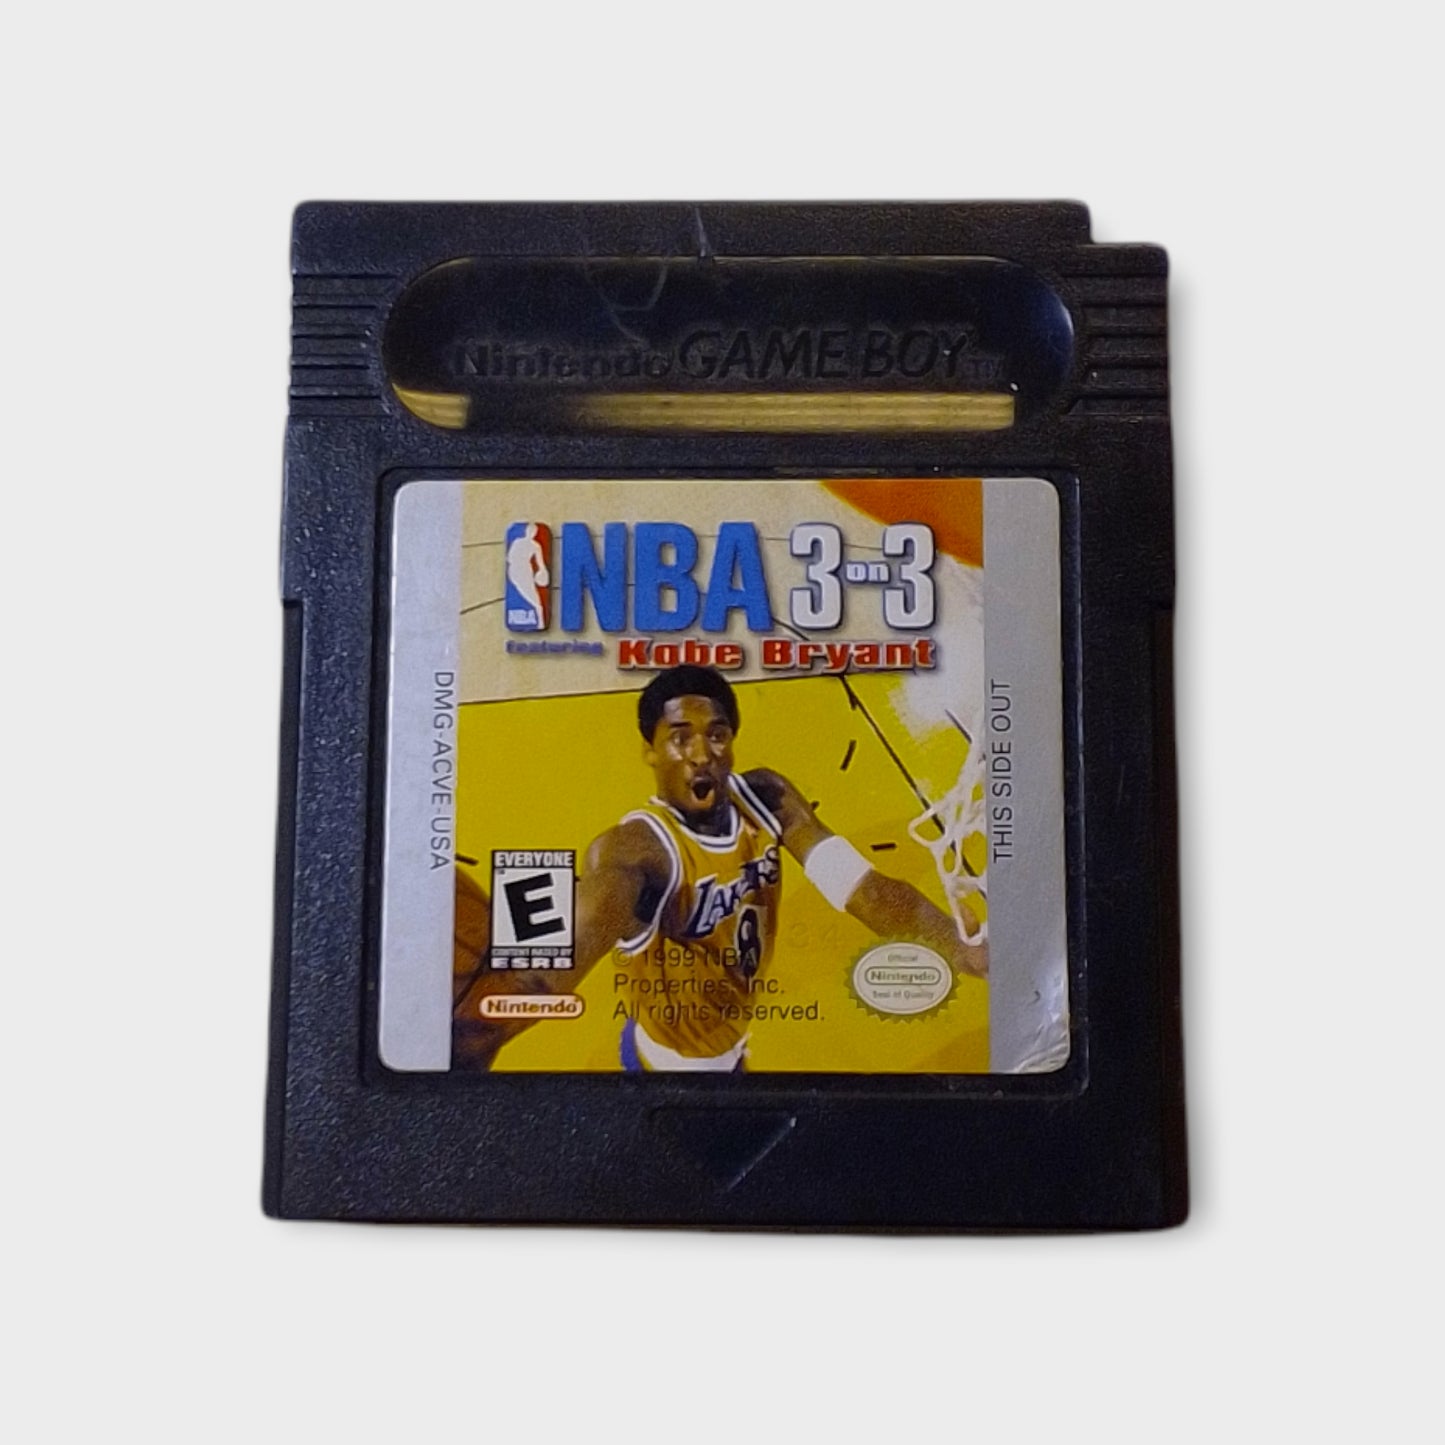 NBA 3 on 3 featuring Kobe Bryant Nintendo Game Boy